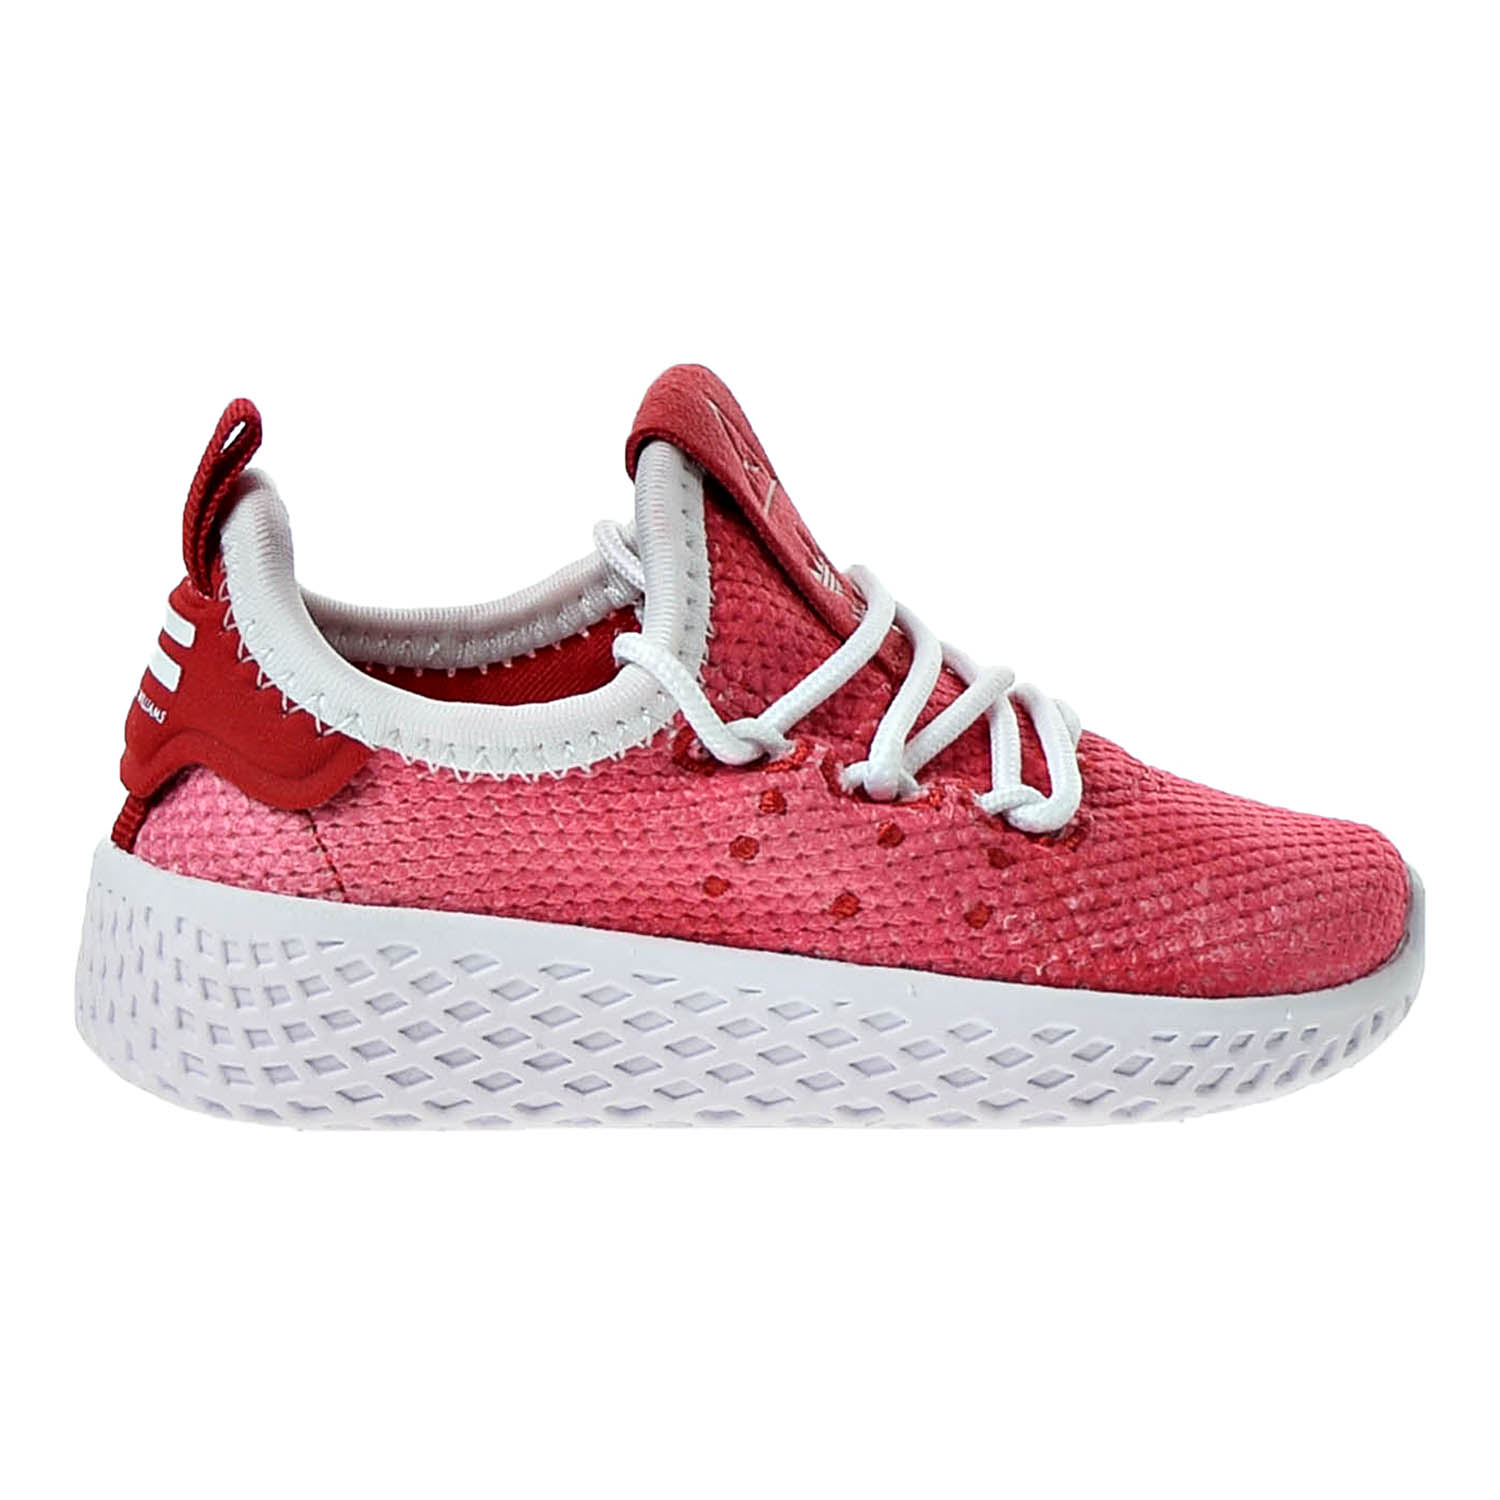 adidas hu shoes pink